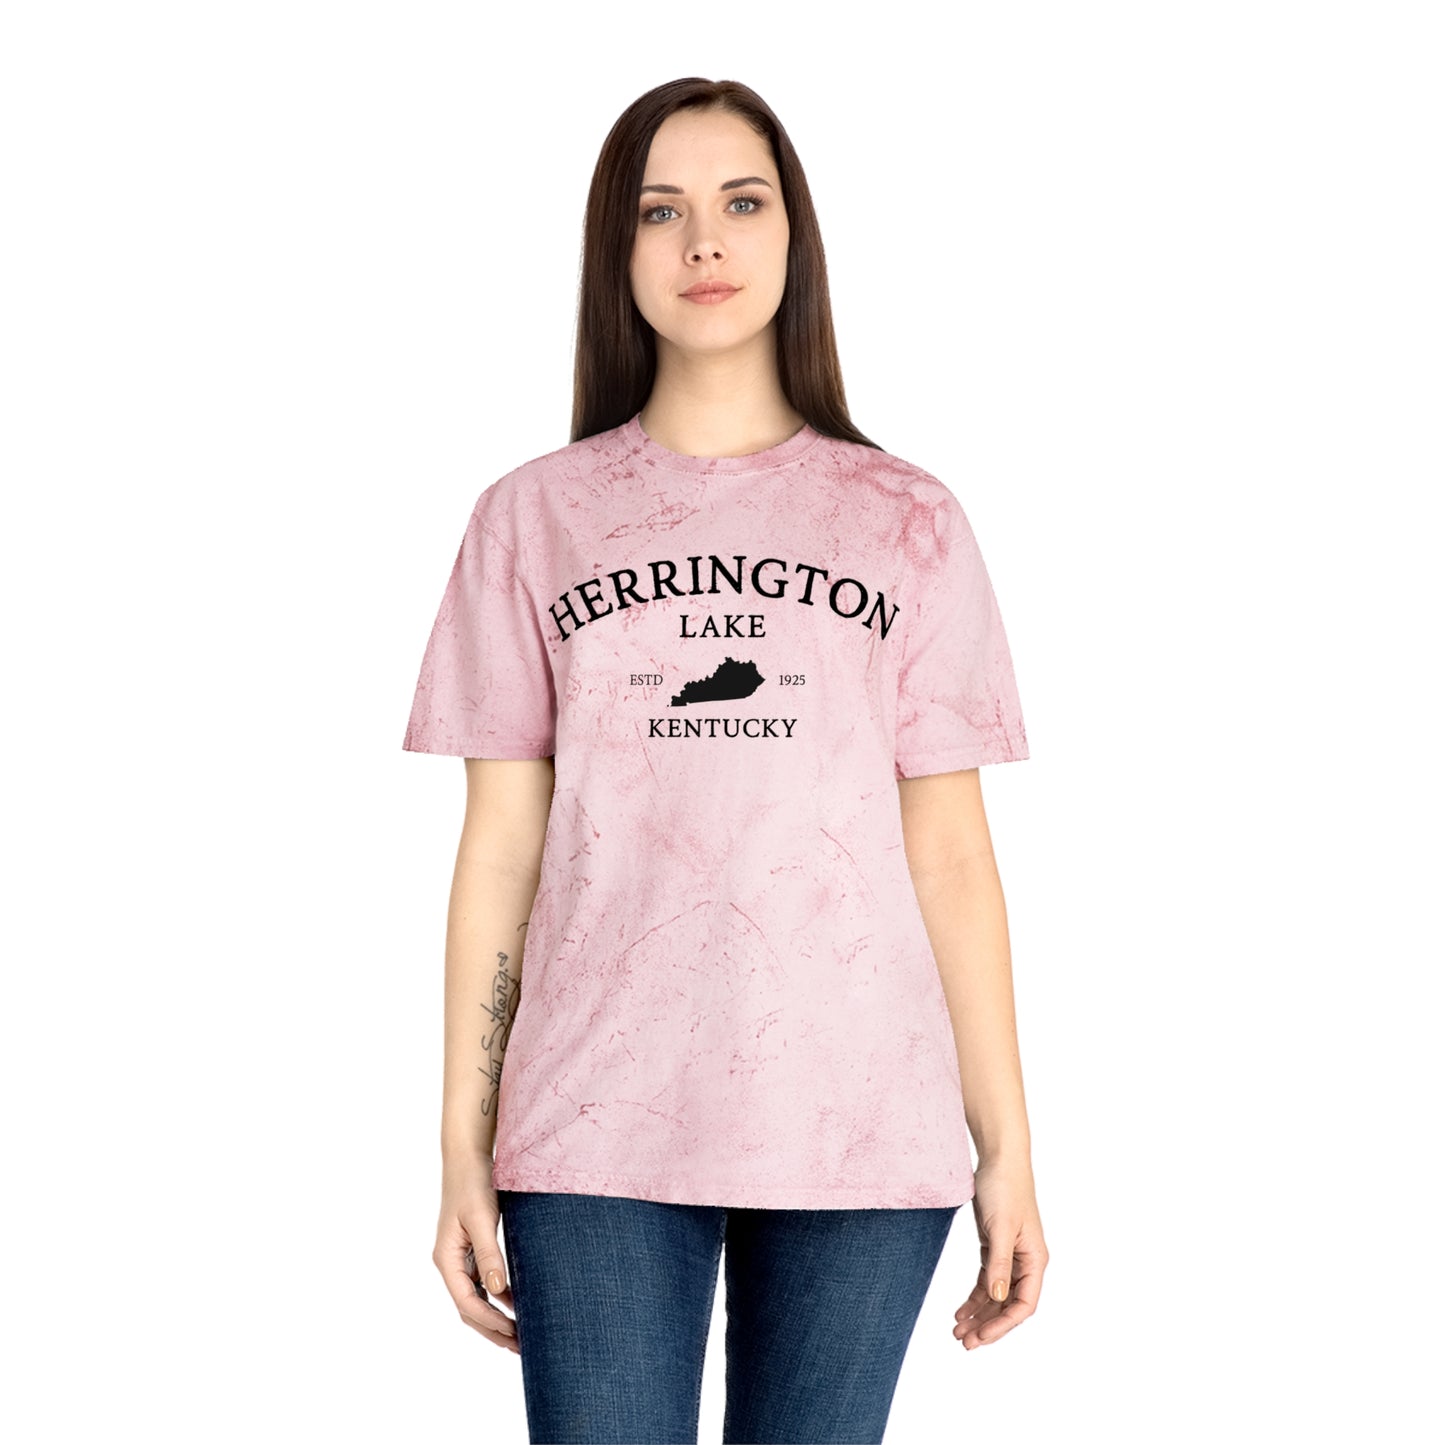 Simply Herrington Color Blast T-Shirt